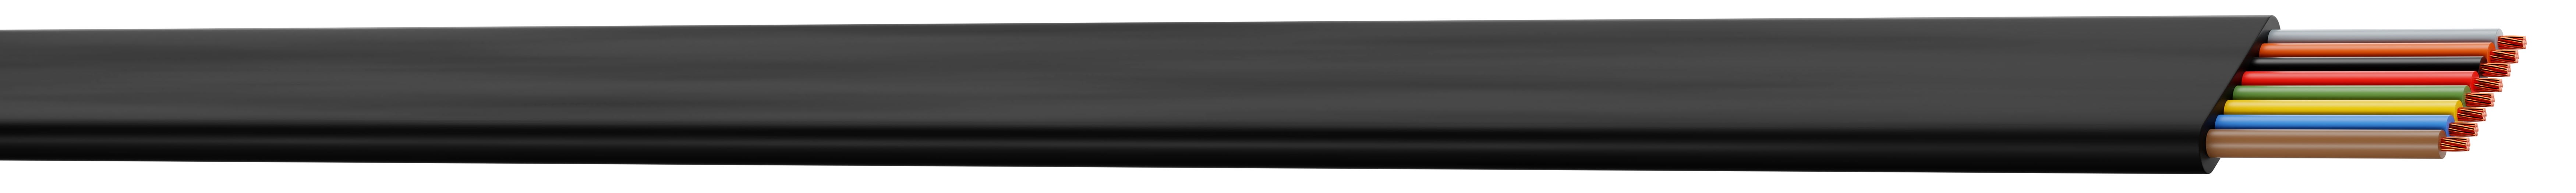 CAE Data - Câble plat noir